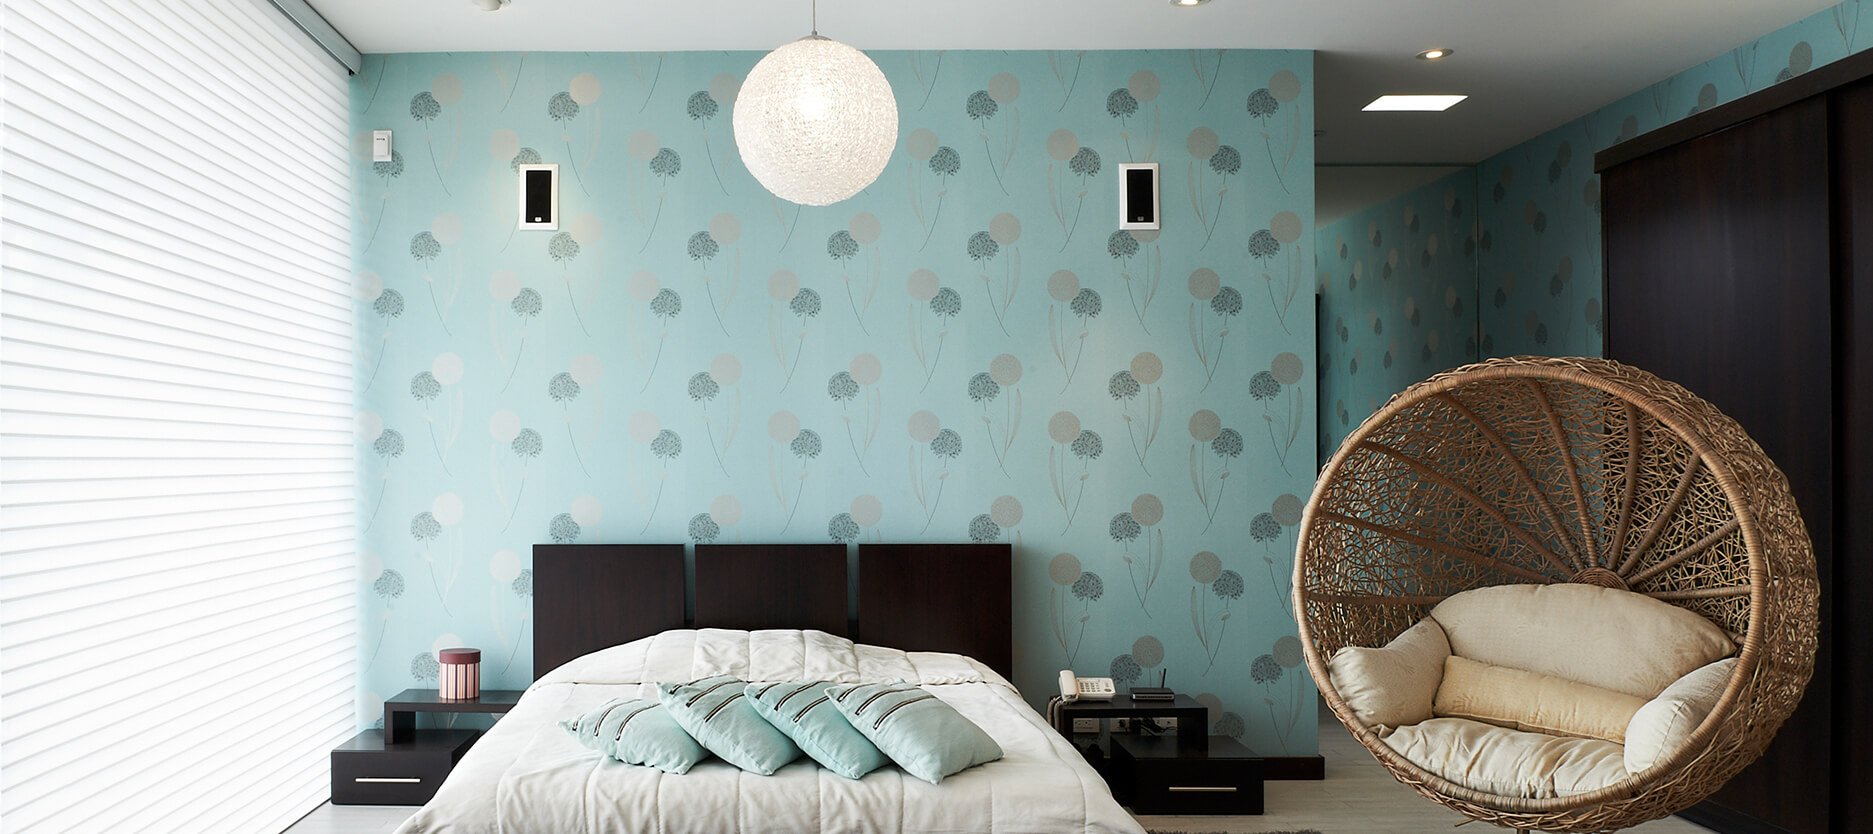 wallpaper dinding kamar tidur romantis,bedroom,room,wall,interior design,furniture